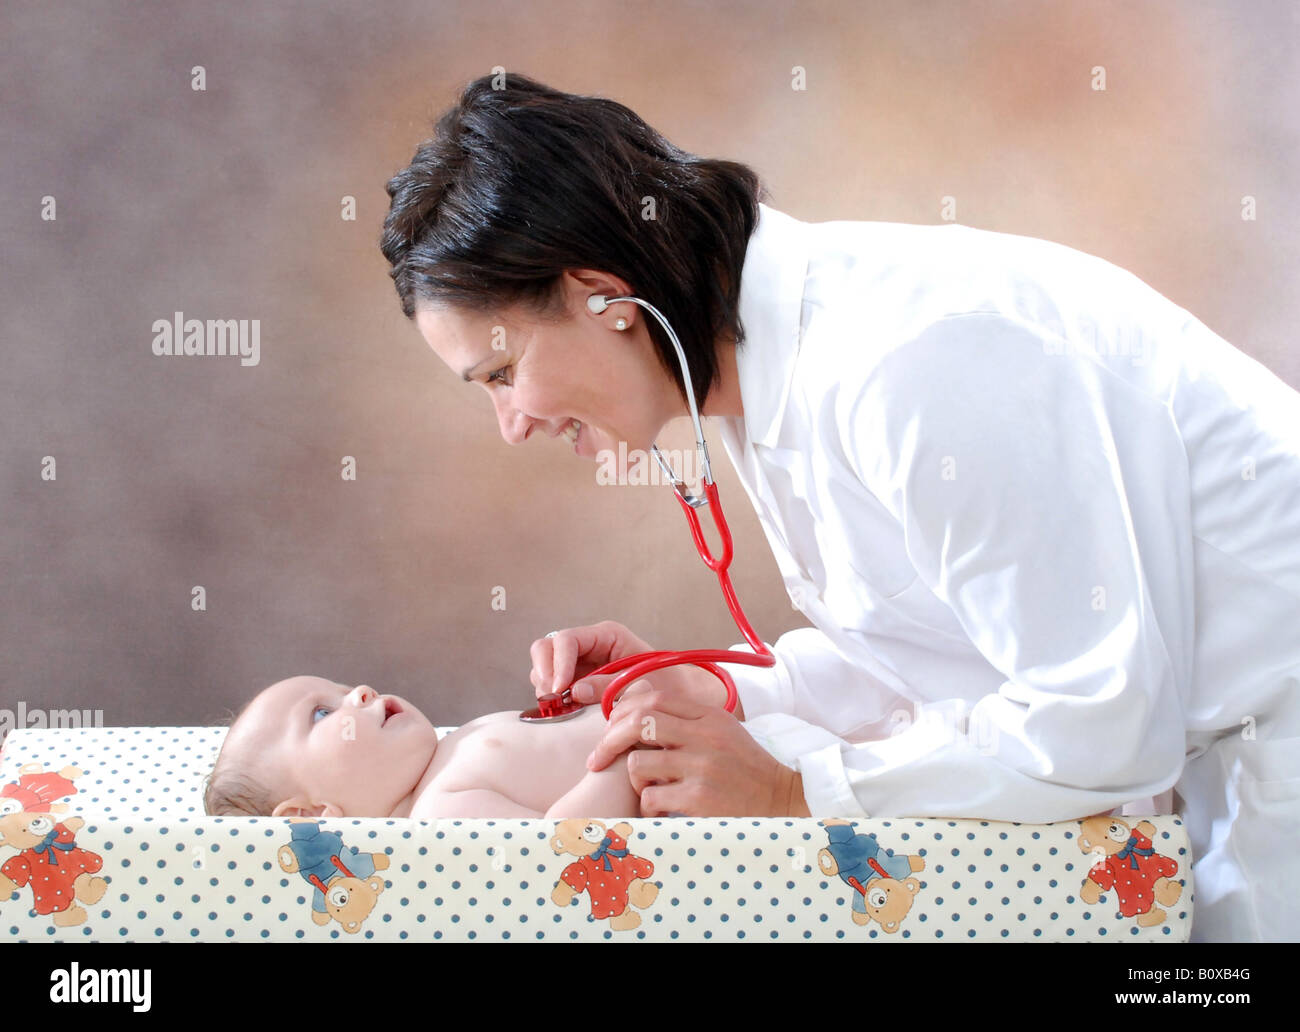 paediatrician with baby Stock Photo